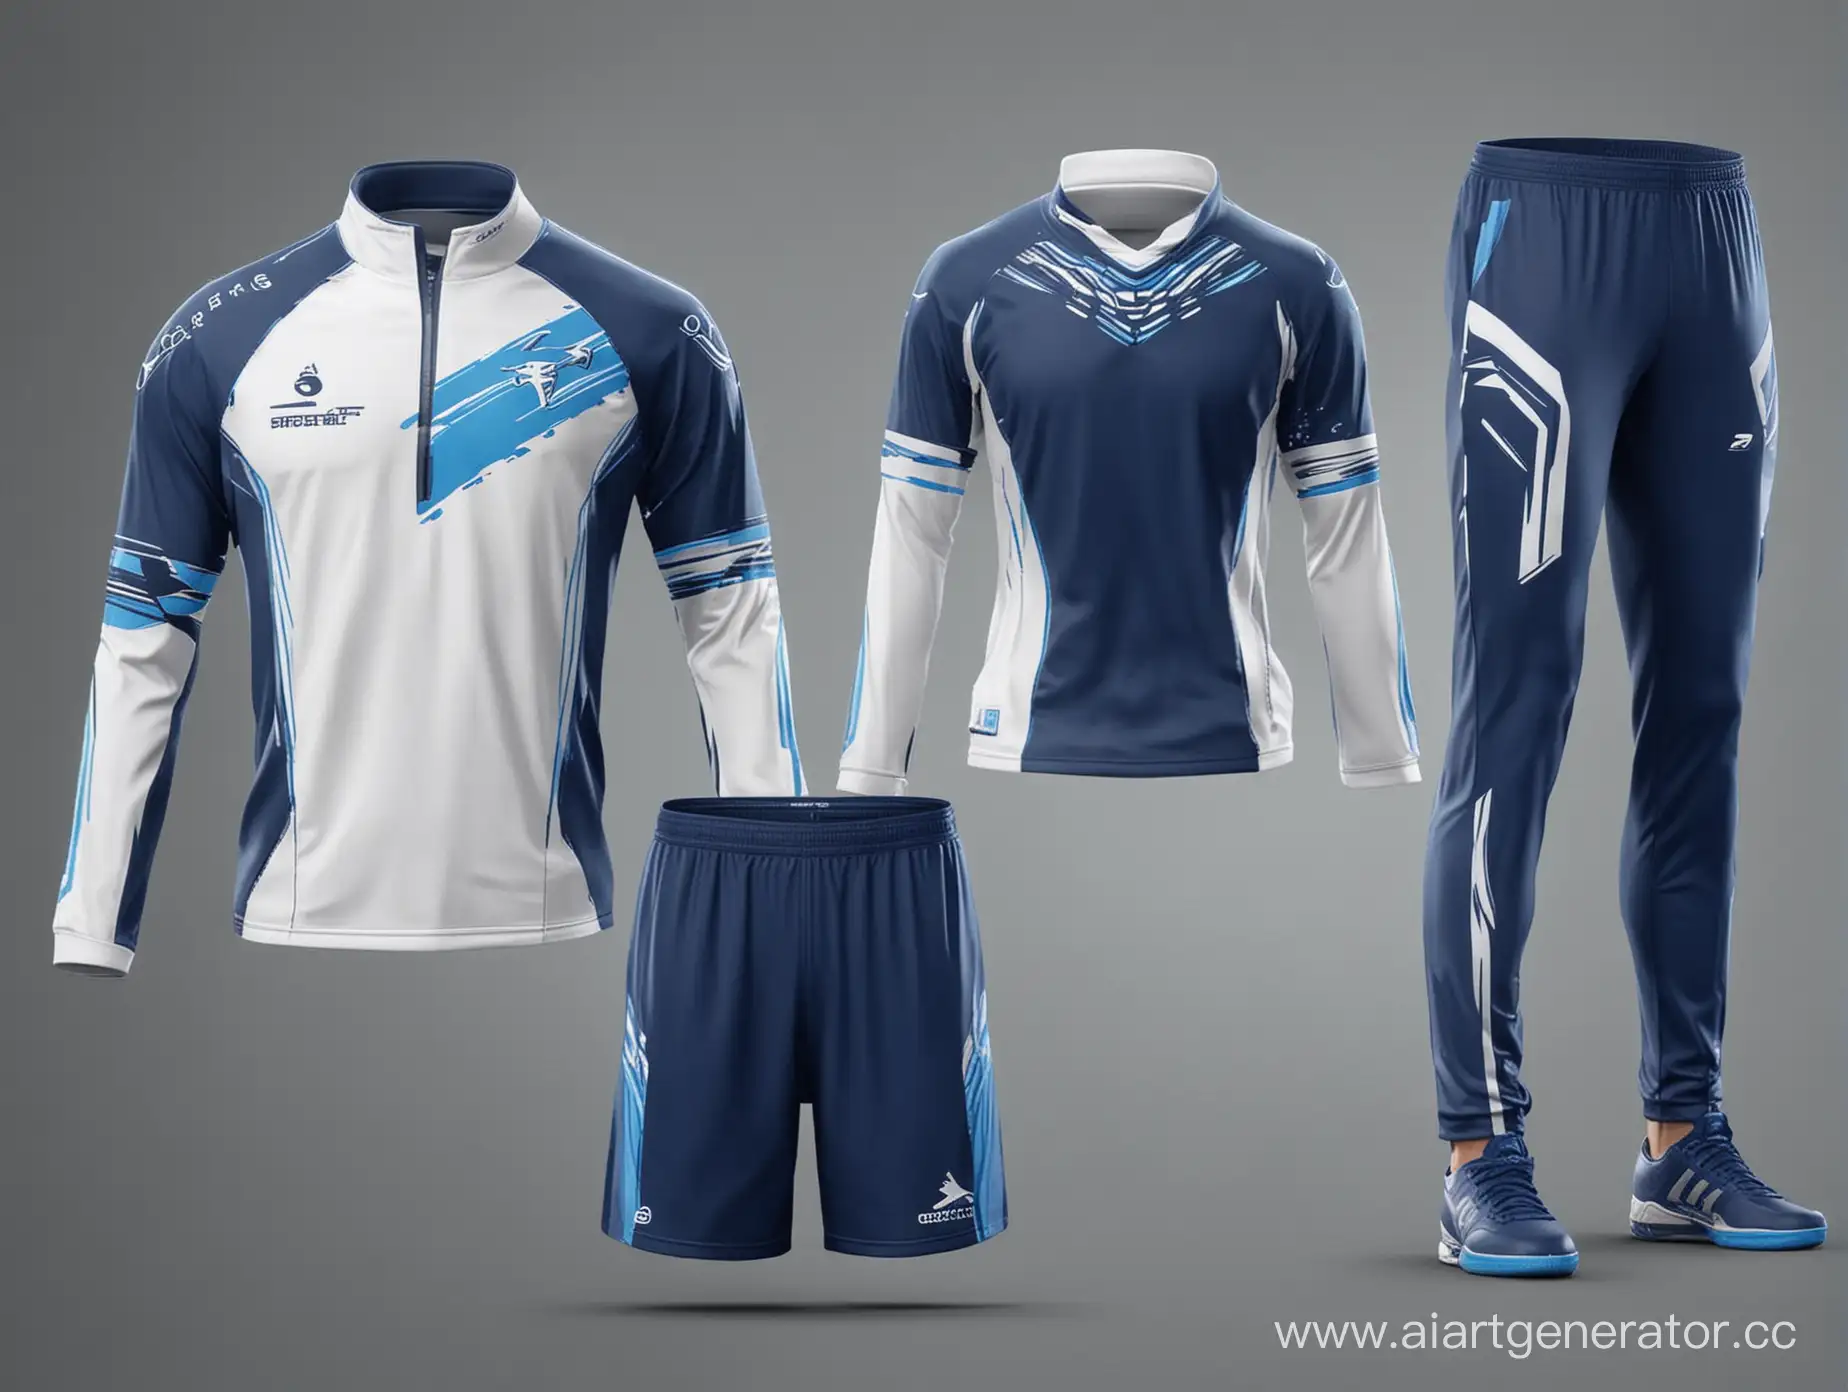 Futuristic-Cyber-Sports-Uniform-Design-in-White-and-Blue